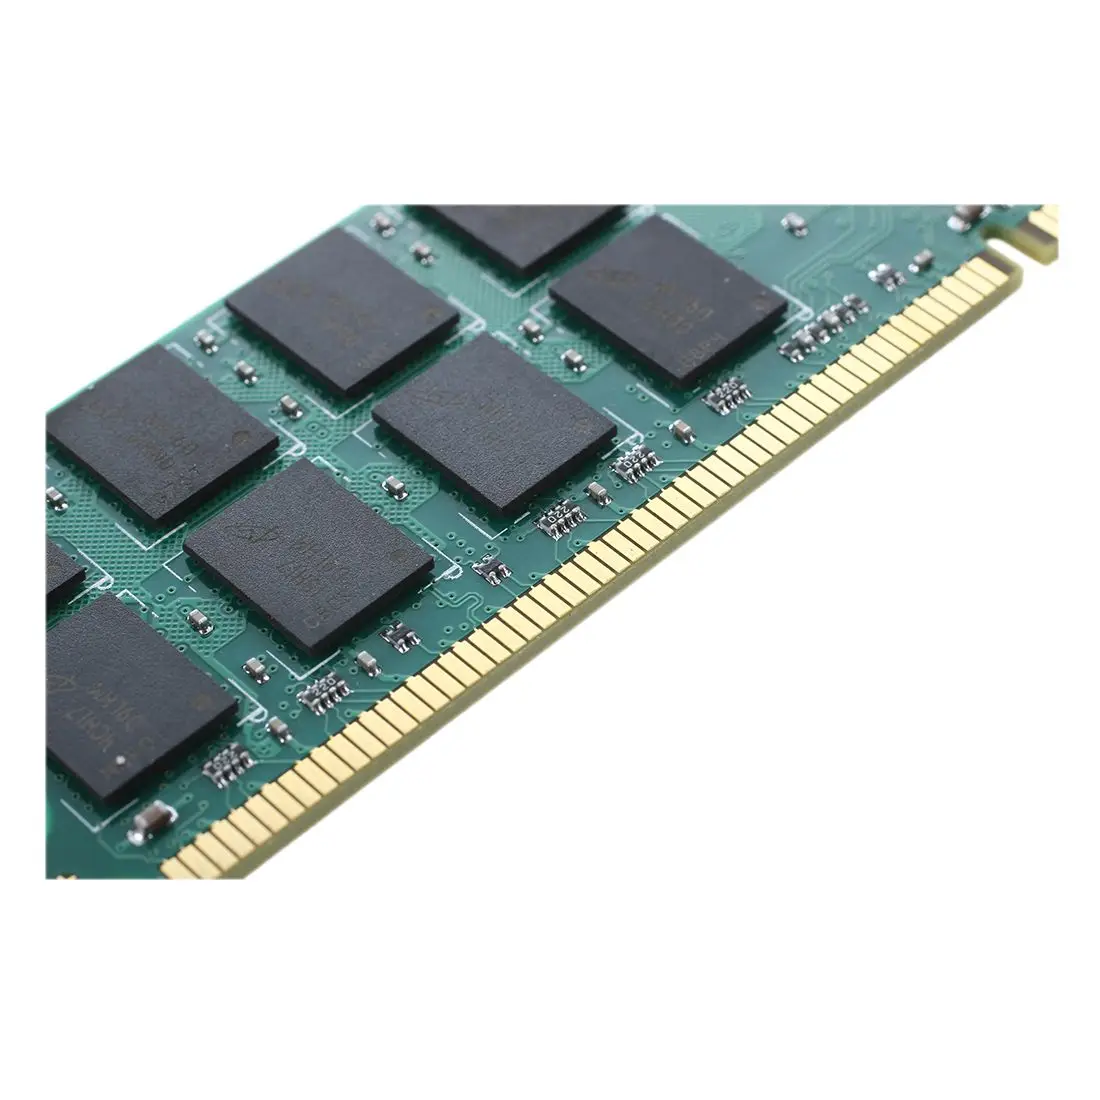 Hot-8G (2x4G) Память Оперативная память DDR2 PC2-6400 800 MHz рабочего non-ecc (без коррекции ошибок) DIMM 240 Pin для AMD